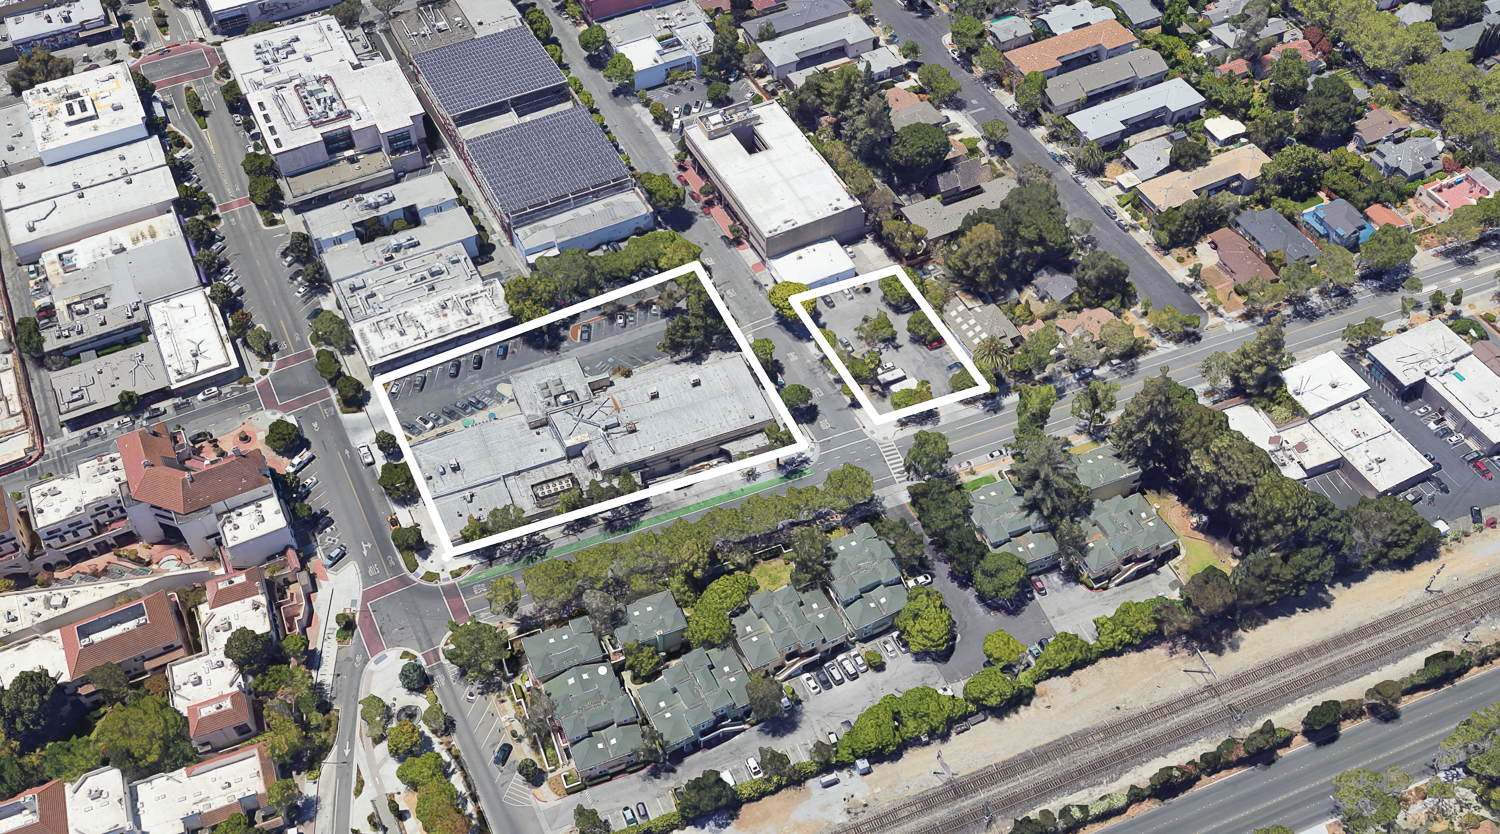 156 California Avenue, image by Google Satellite